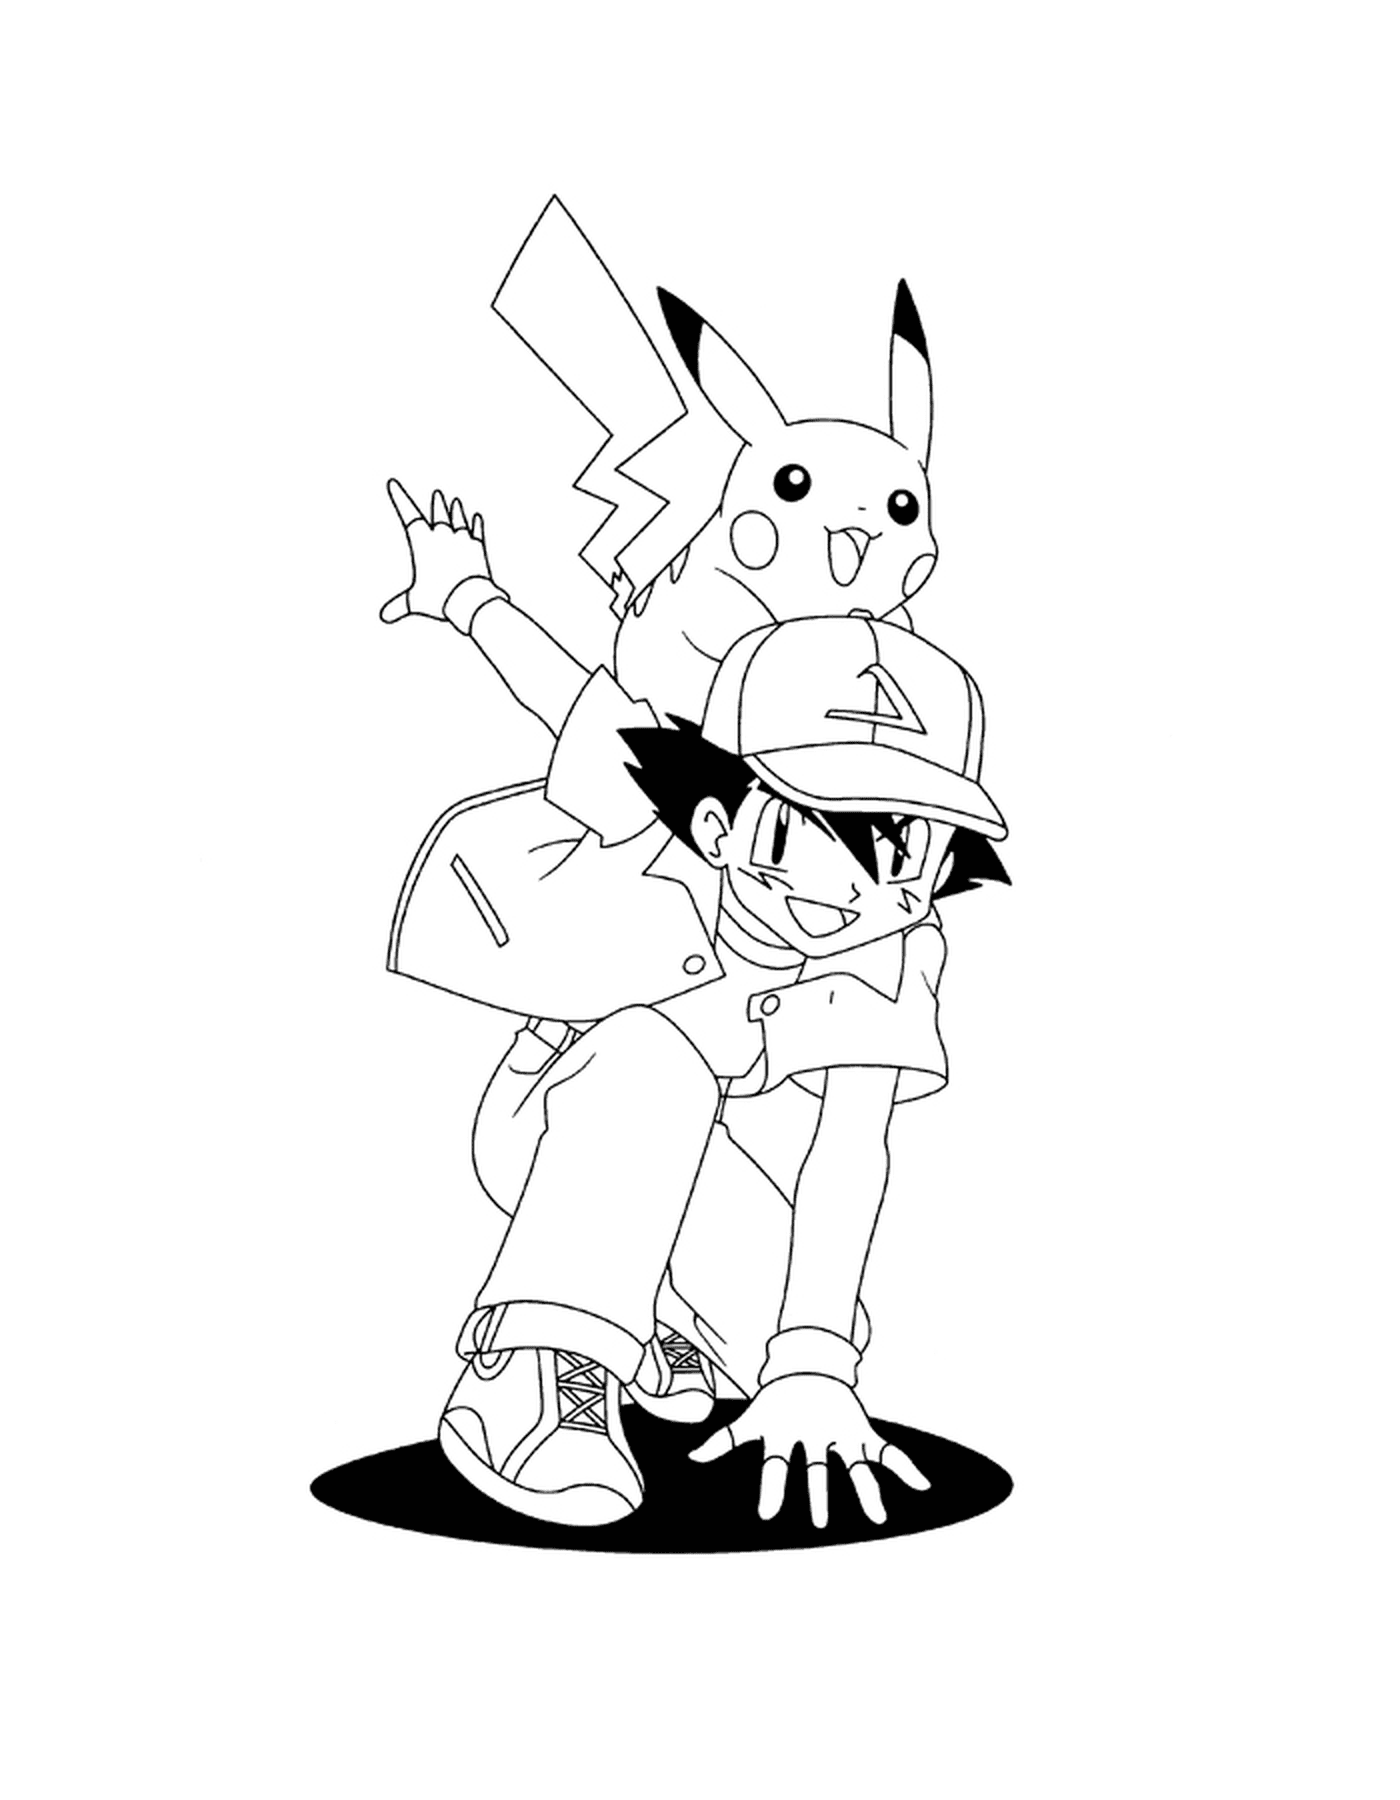   Sacha portant Pikachu sur son dos 